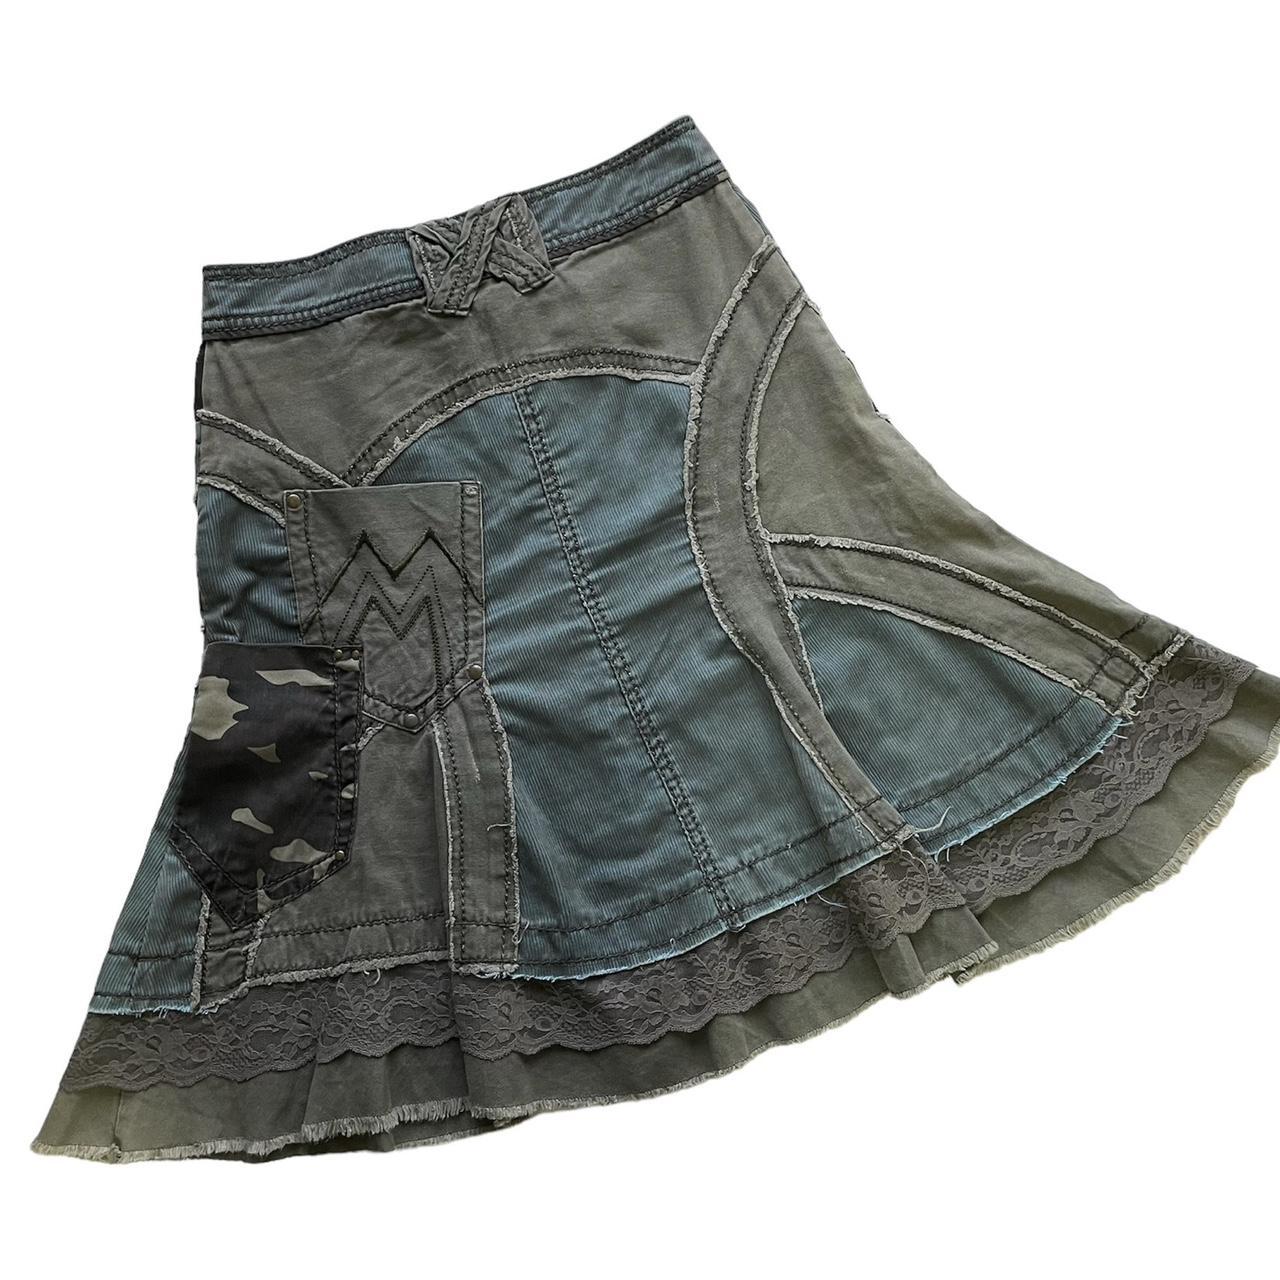 Morgan De Toi Women's Khaki and Green Skirt (2)